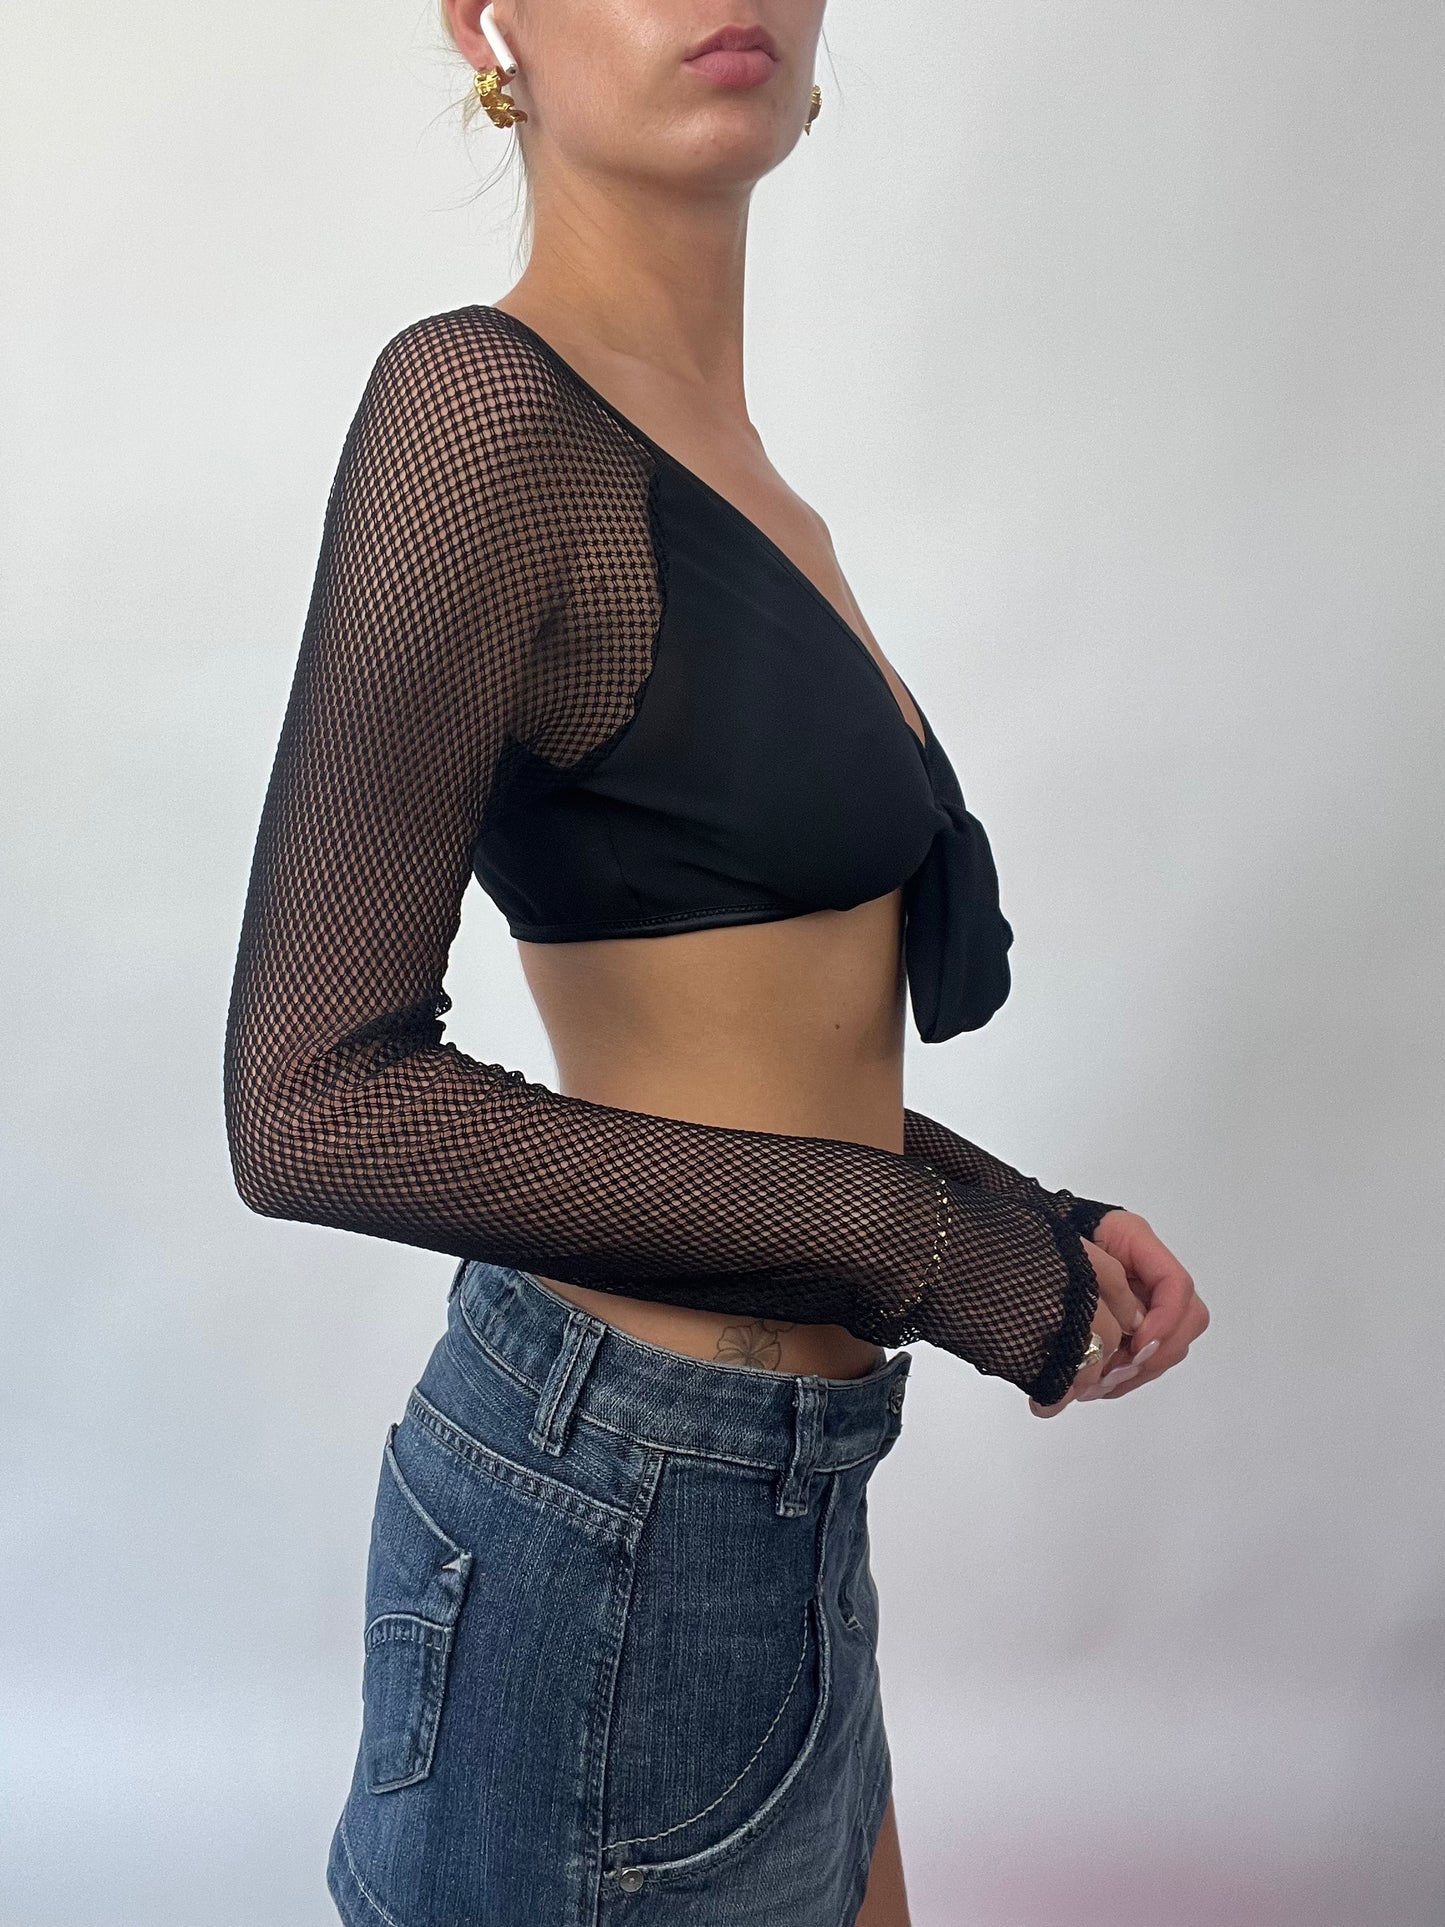 BRAT GIRL SUMMER DROP | small black long sleeved bolero with mesh sleeves